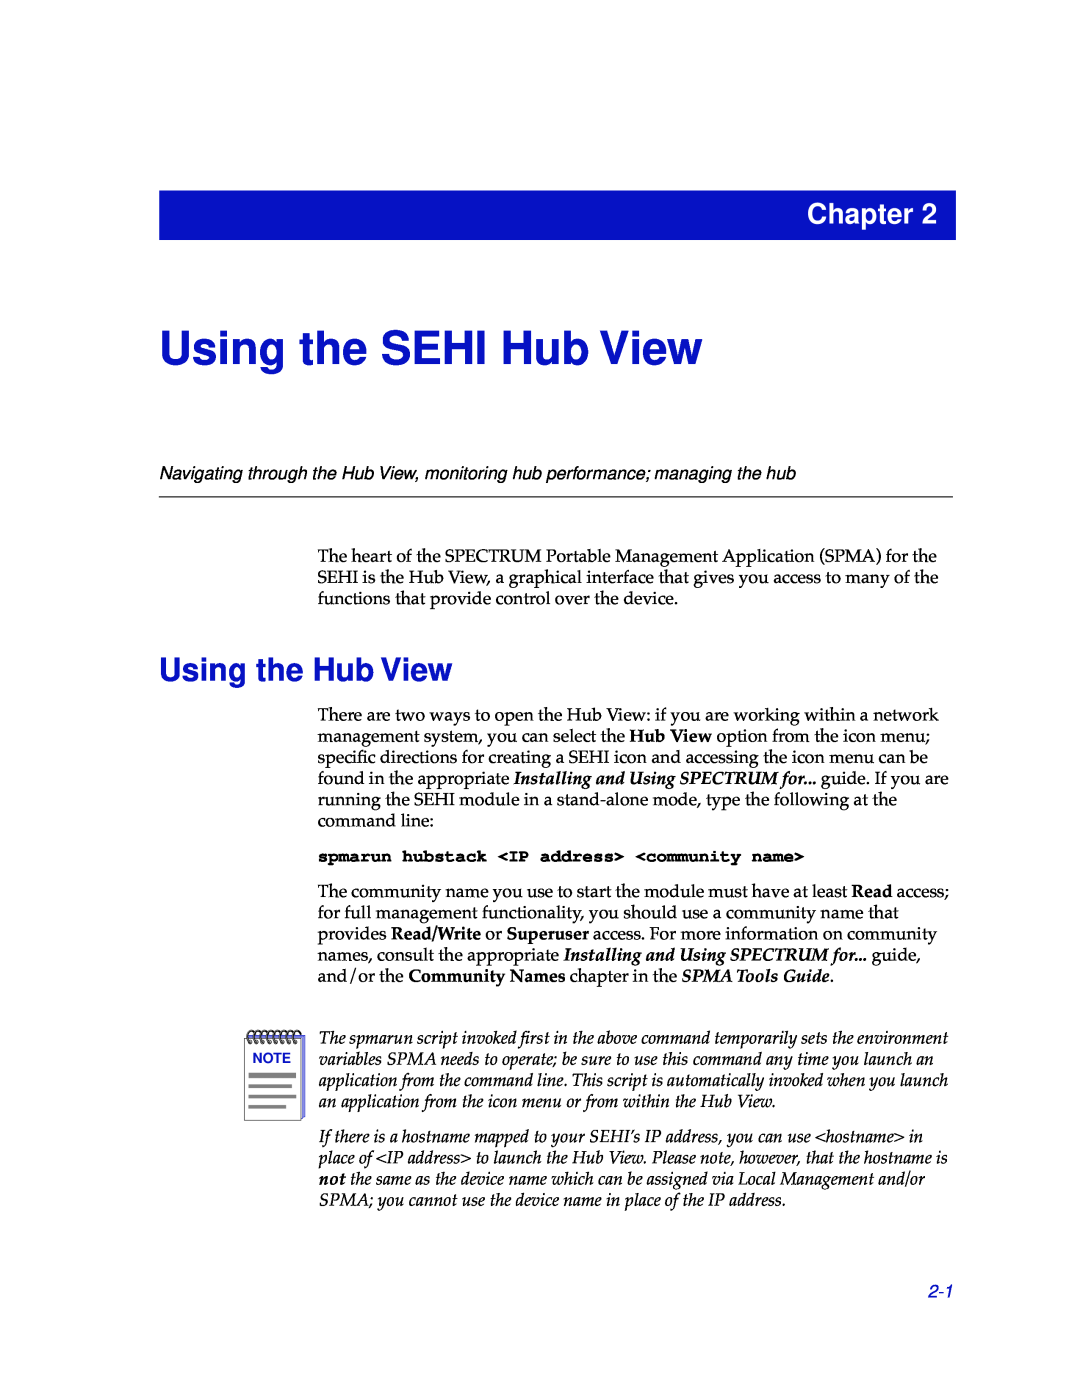 Cabletron Systems SEHI-22/24 manual Using the SEHI Hub View, Using the Hub View, spmarun hubstack IP address community name 